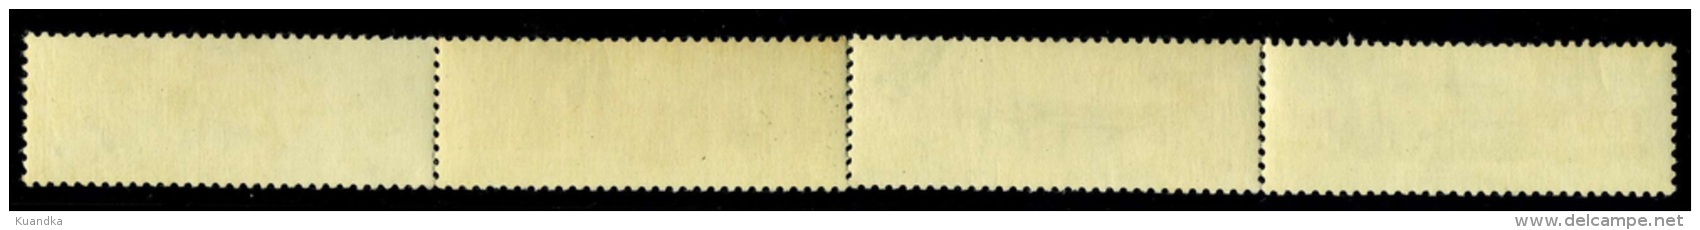 1961 PEKING-Table Tennis Championships,China,Chine ,Cina,Mi.591-594,MNH - Unused Stamps